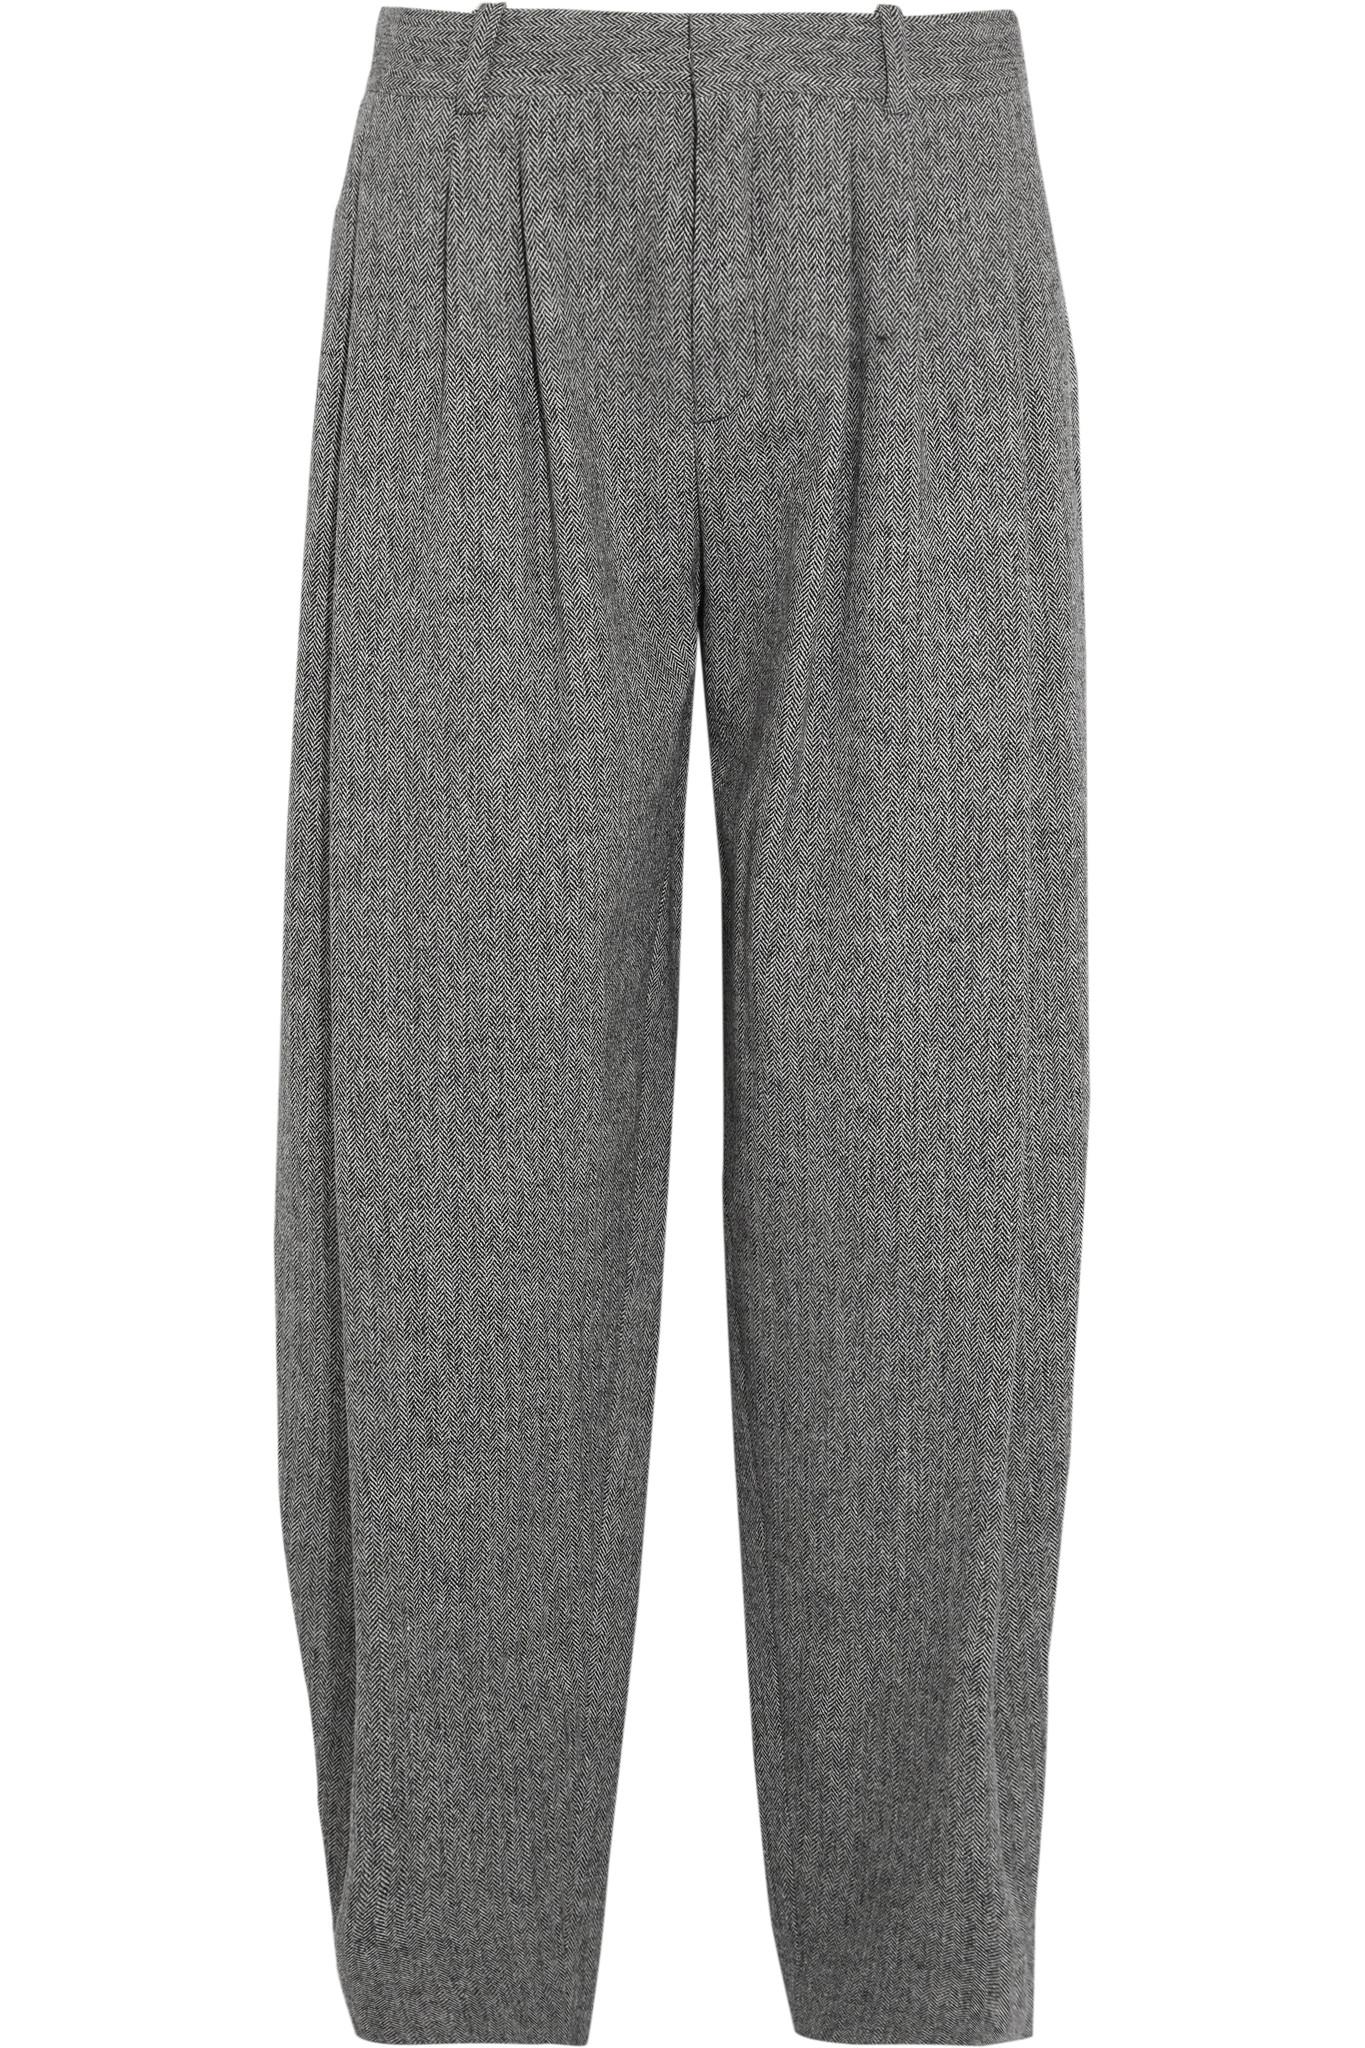 Chloé Pleated Wool-blend Tweed Wide-leg Pants in Gray - Lyst